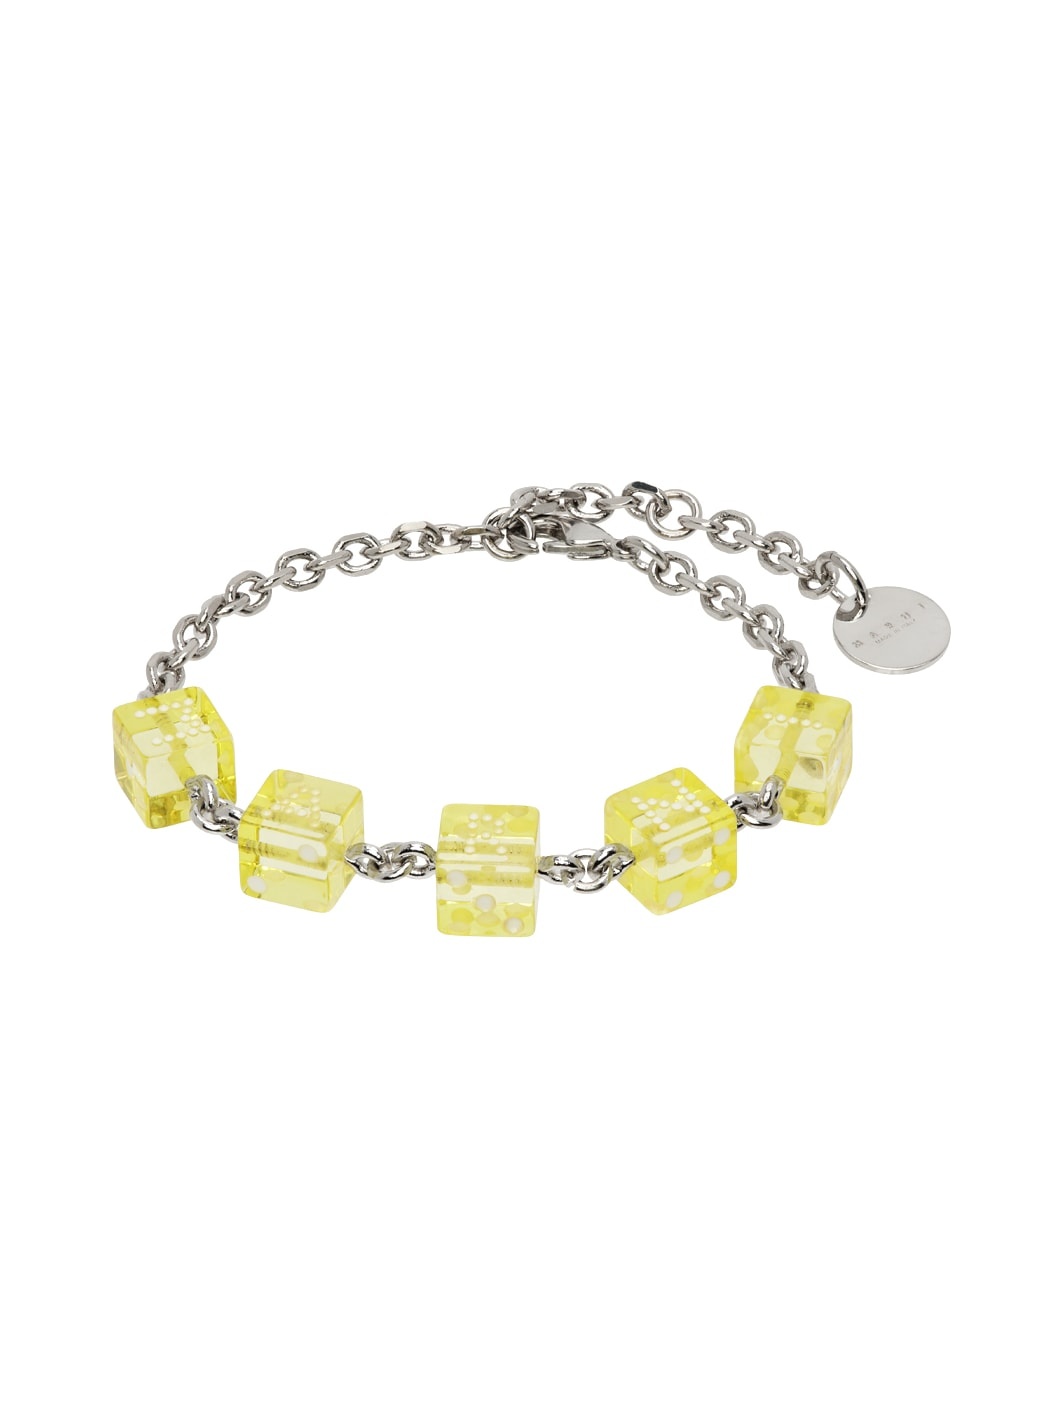 Silver & Yellow Dice Charm Bracelet - 1